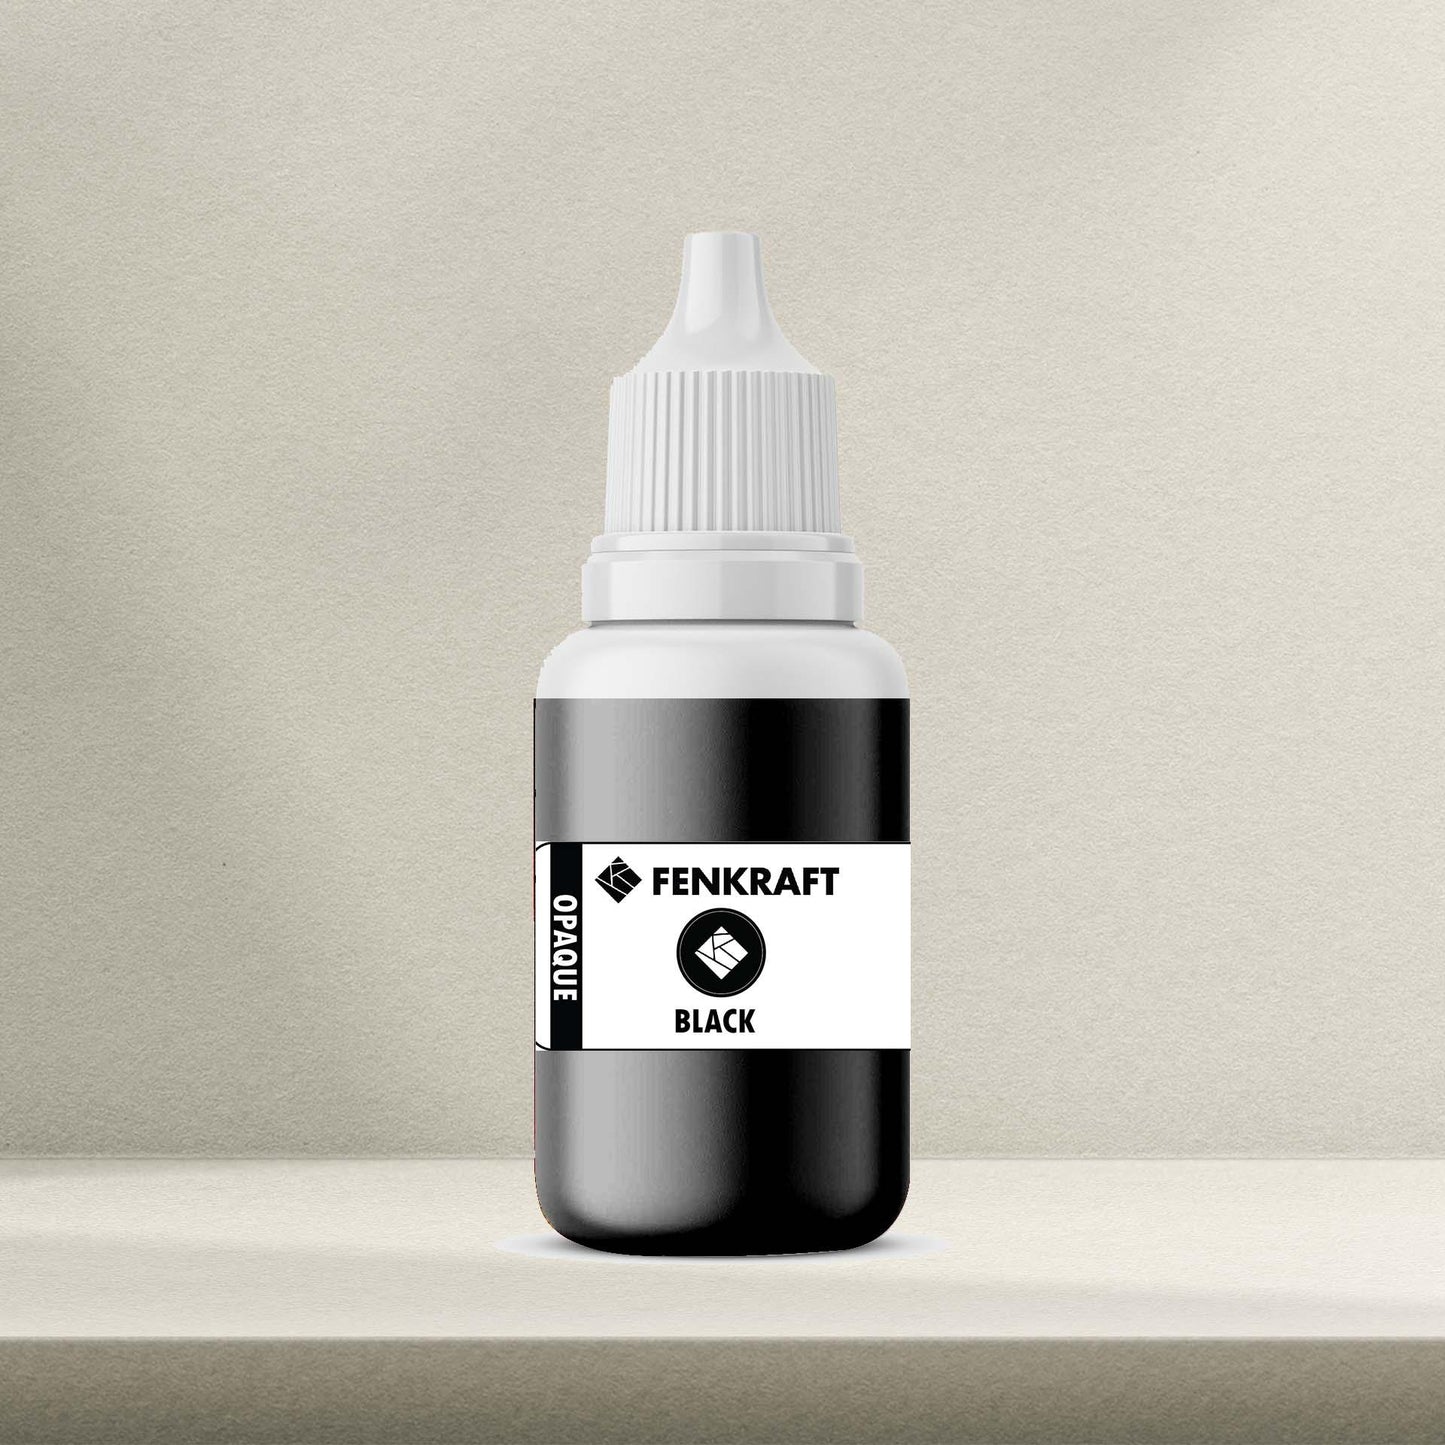 War Black -Premium Pigment -50 Grams | Suitable for Resin Epoxy Art - fenkraft art resin